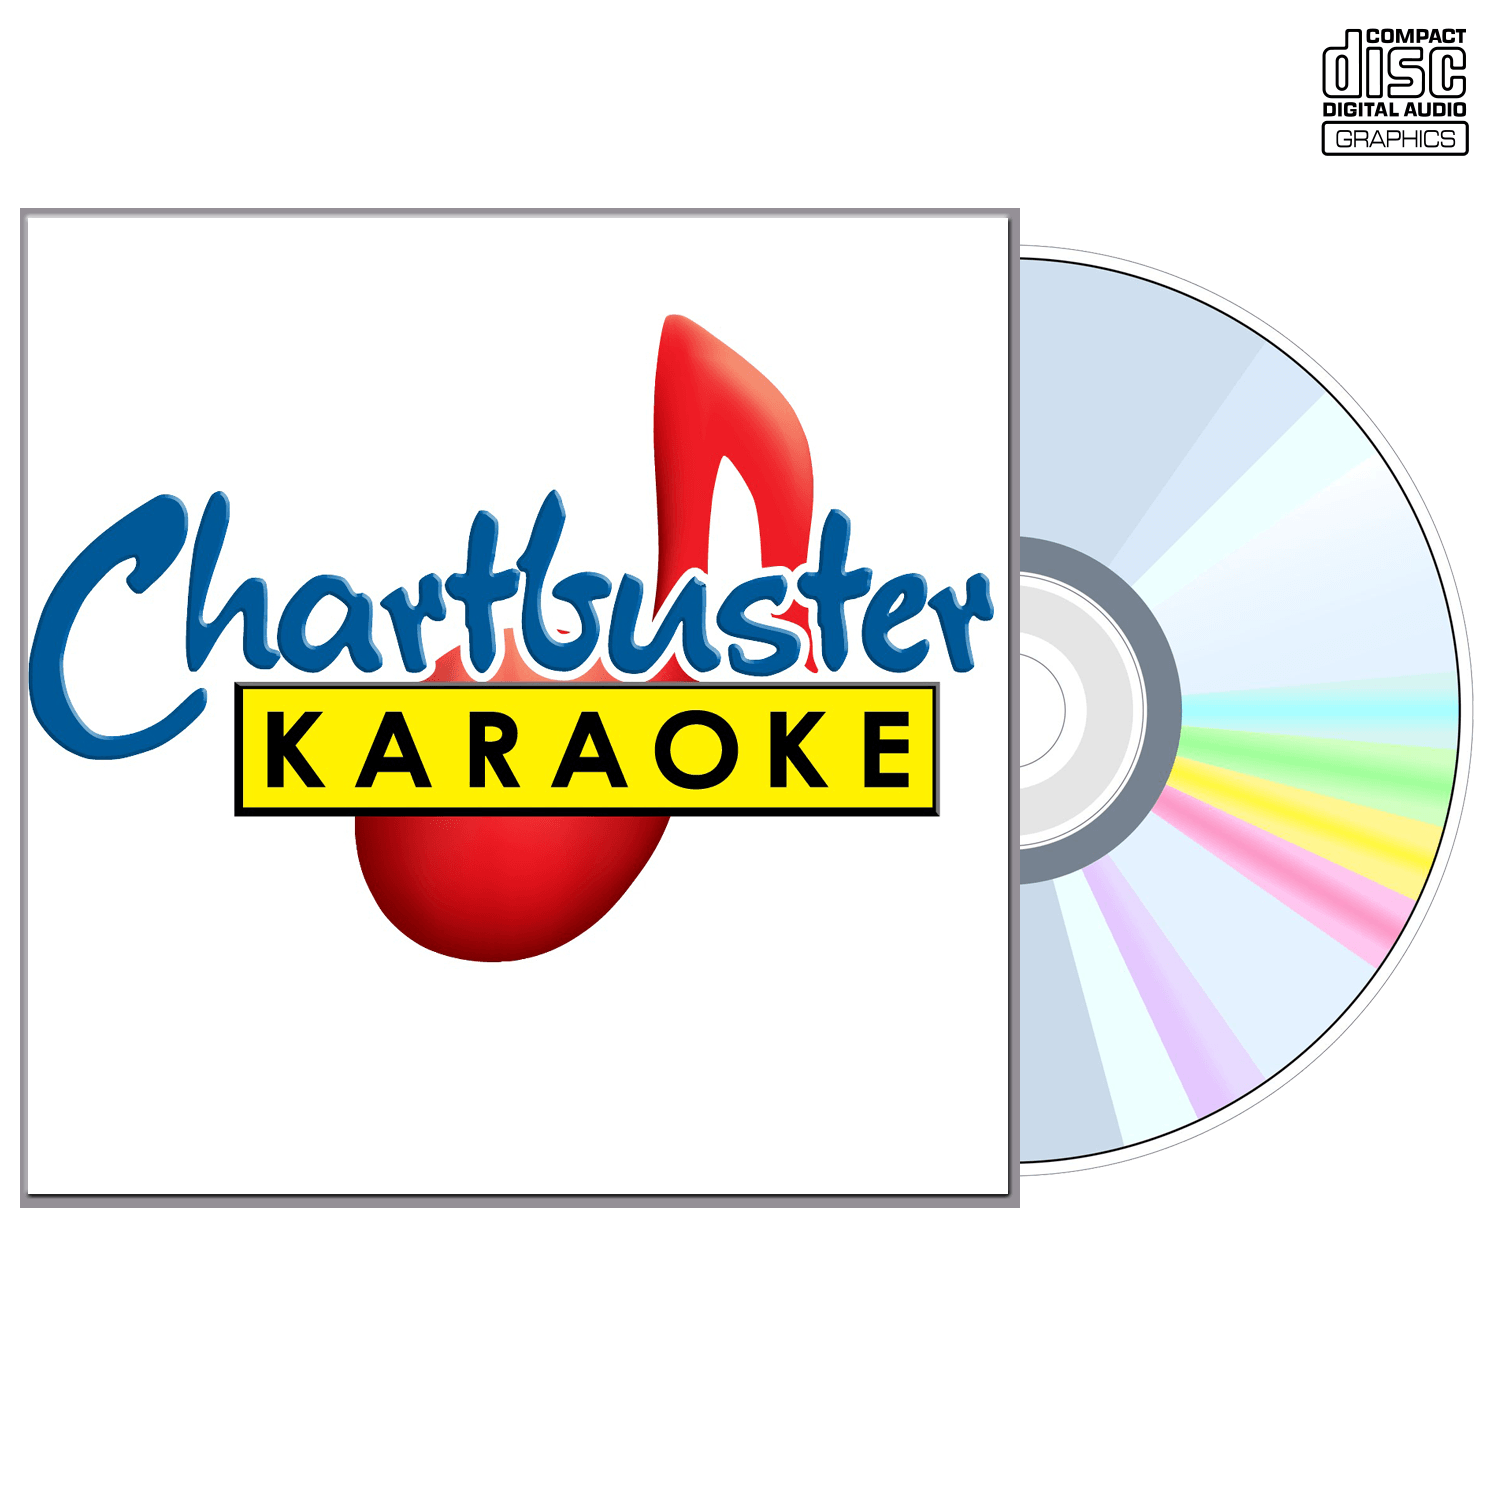 Roseanne Cash - CD+G - Chartbuster Karaoke - Karaoke Home Entertainment